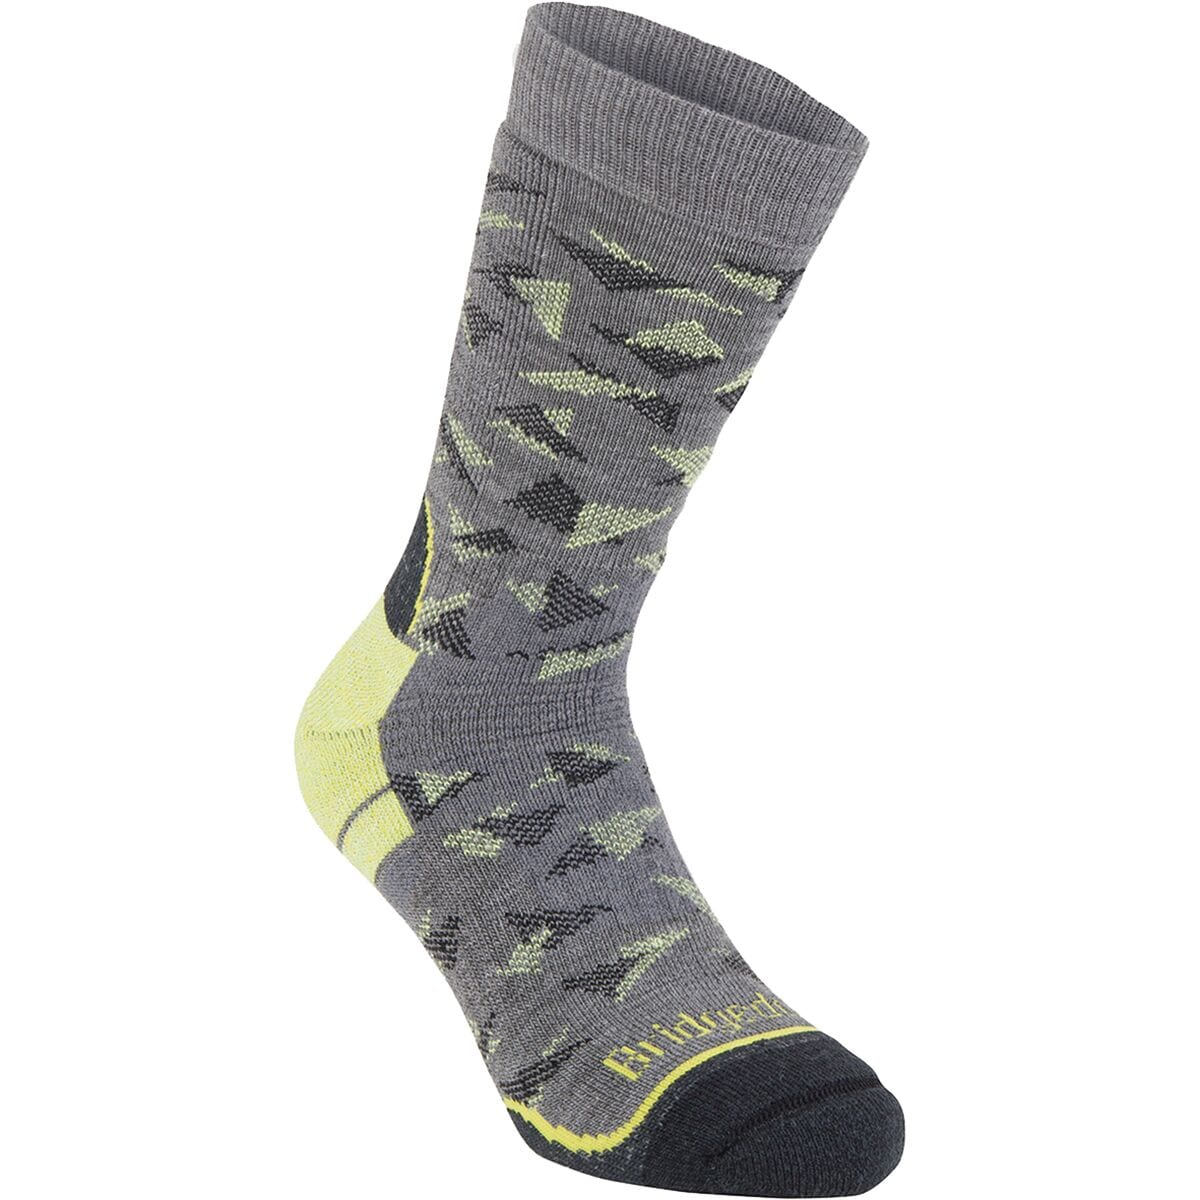 Hike Midweight Merino Endurance Boot Sock - Men